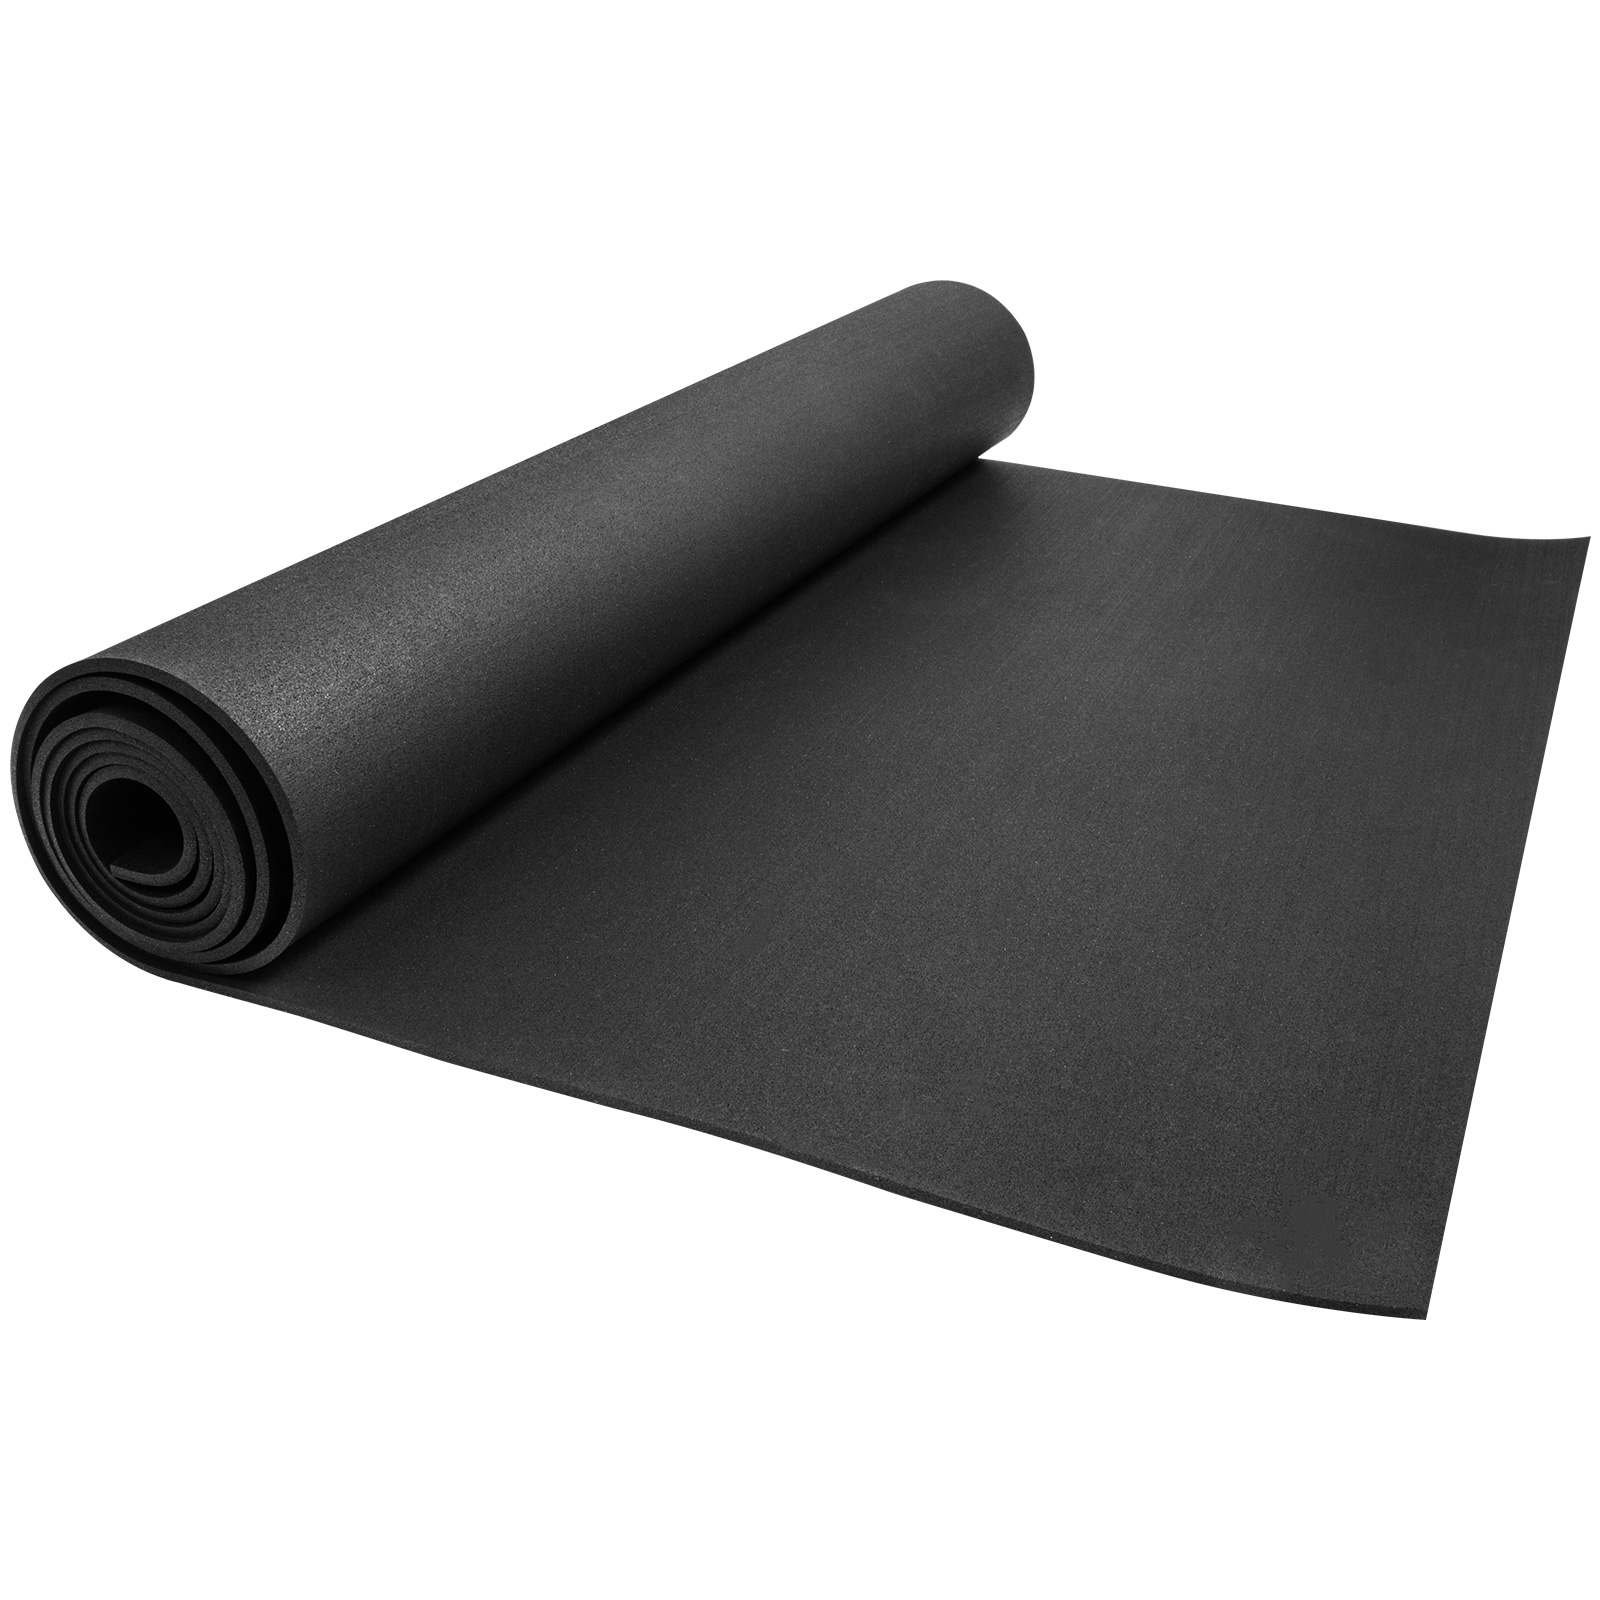 Rubber Flooring Rolls Non Toxic High Density Exercise Gym Equipment Mats Ebay